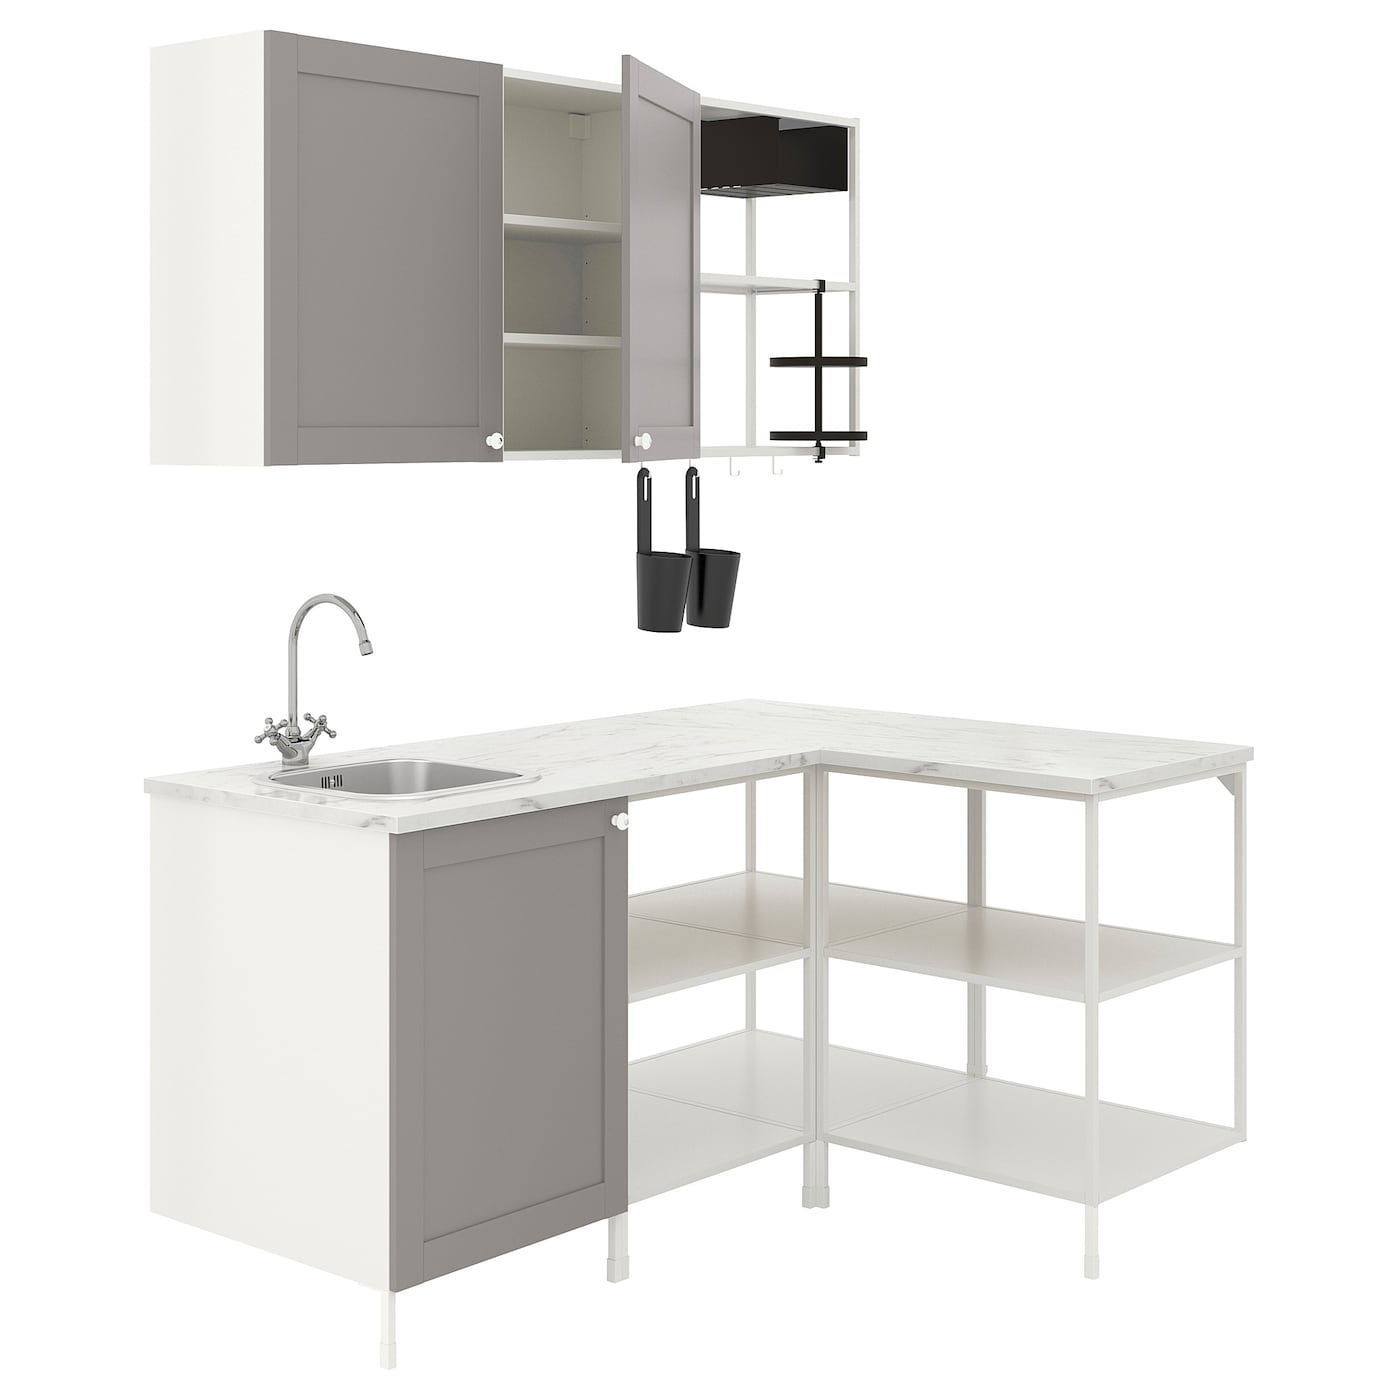 Угловая кухонная комбинация для хранения - ENHET  IKEA/ ЭНХЕТ ИКЕА, 181,5х121,5х75 см, белый/серый